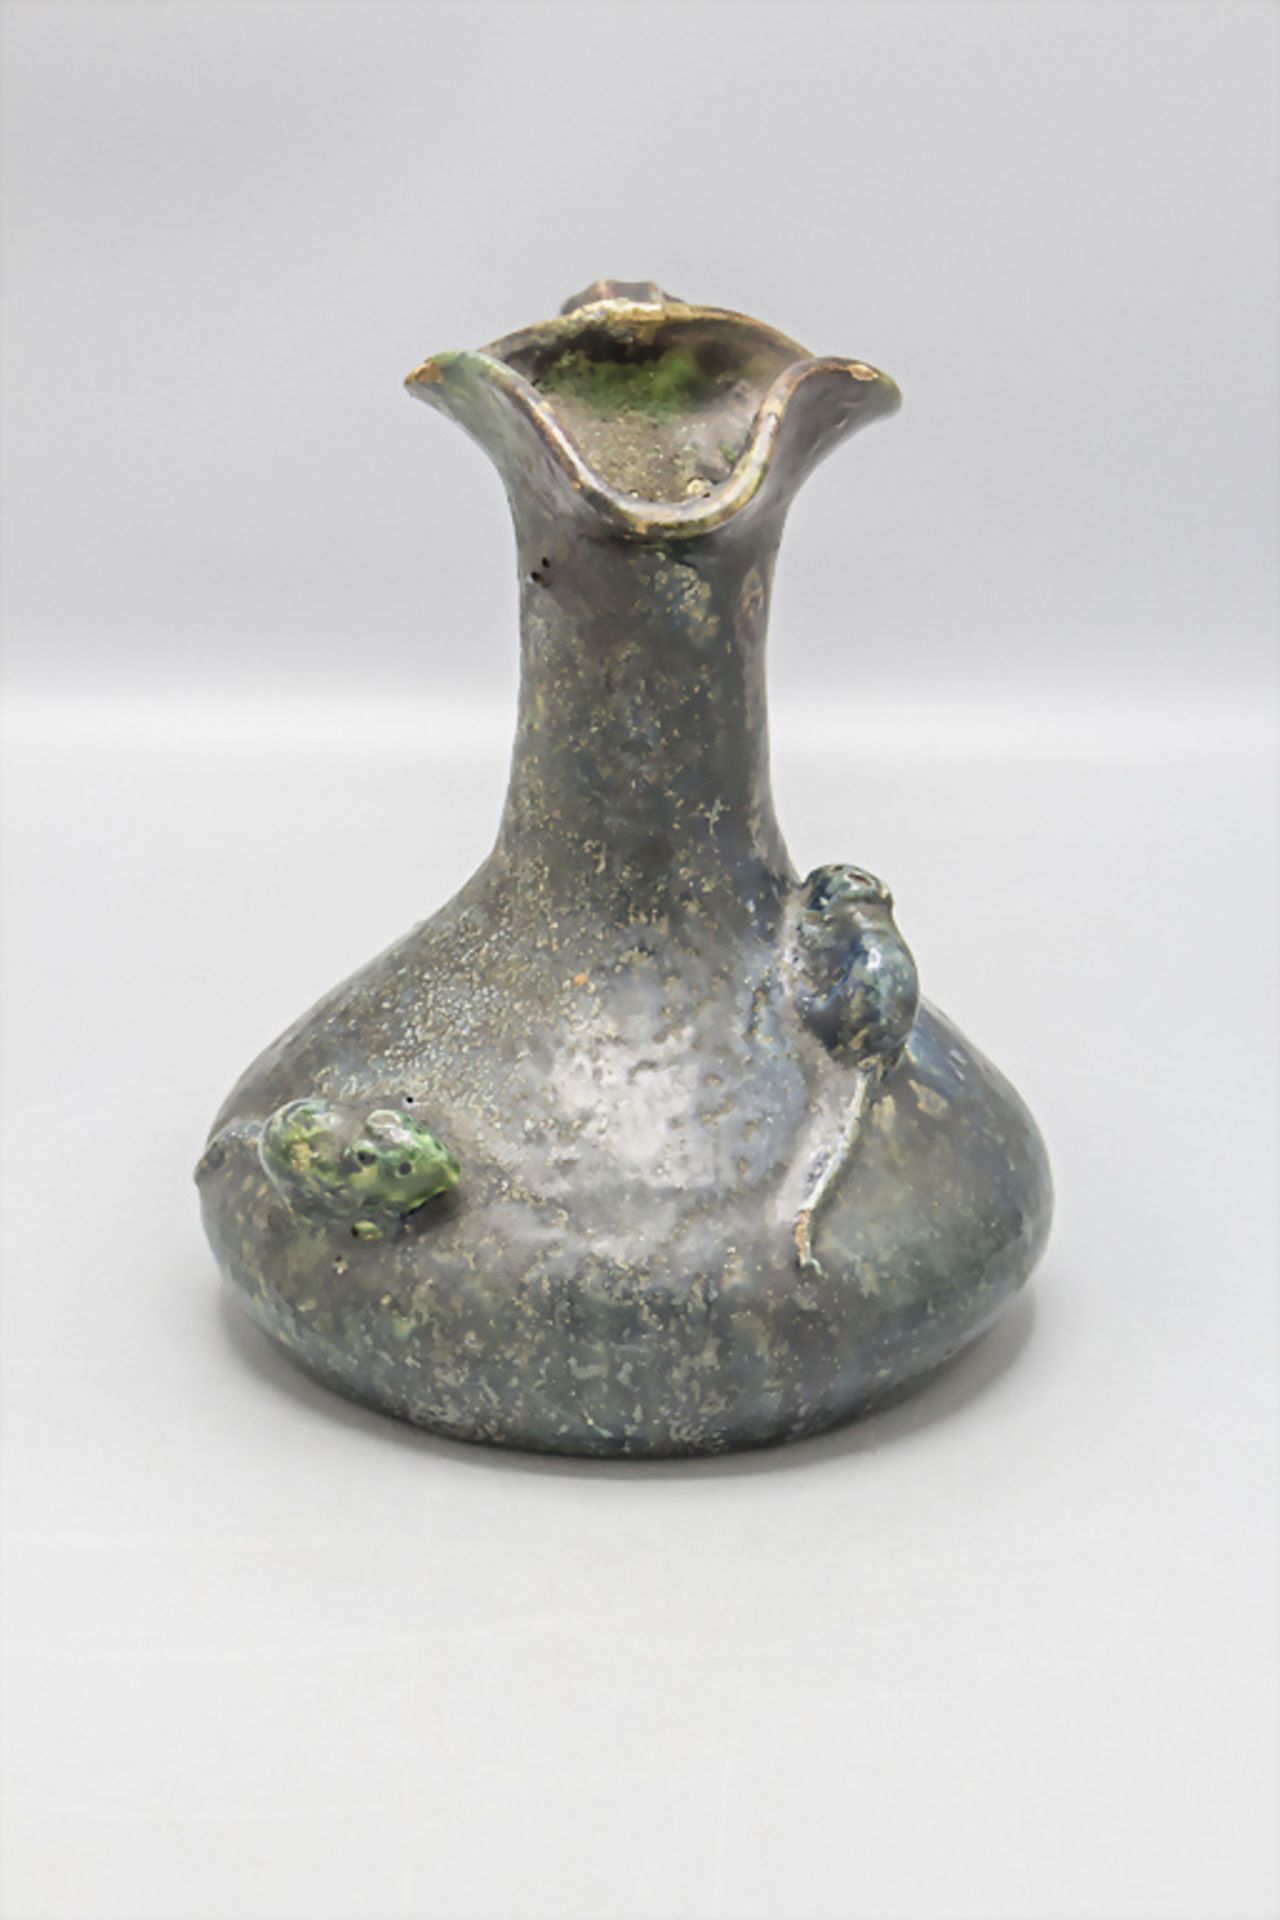 Keramik Henkelvase mit Mäusen / A ceramic handled vase with mice - Image 2 of 7